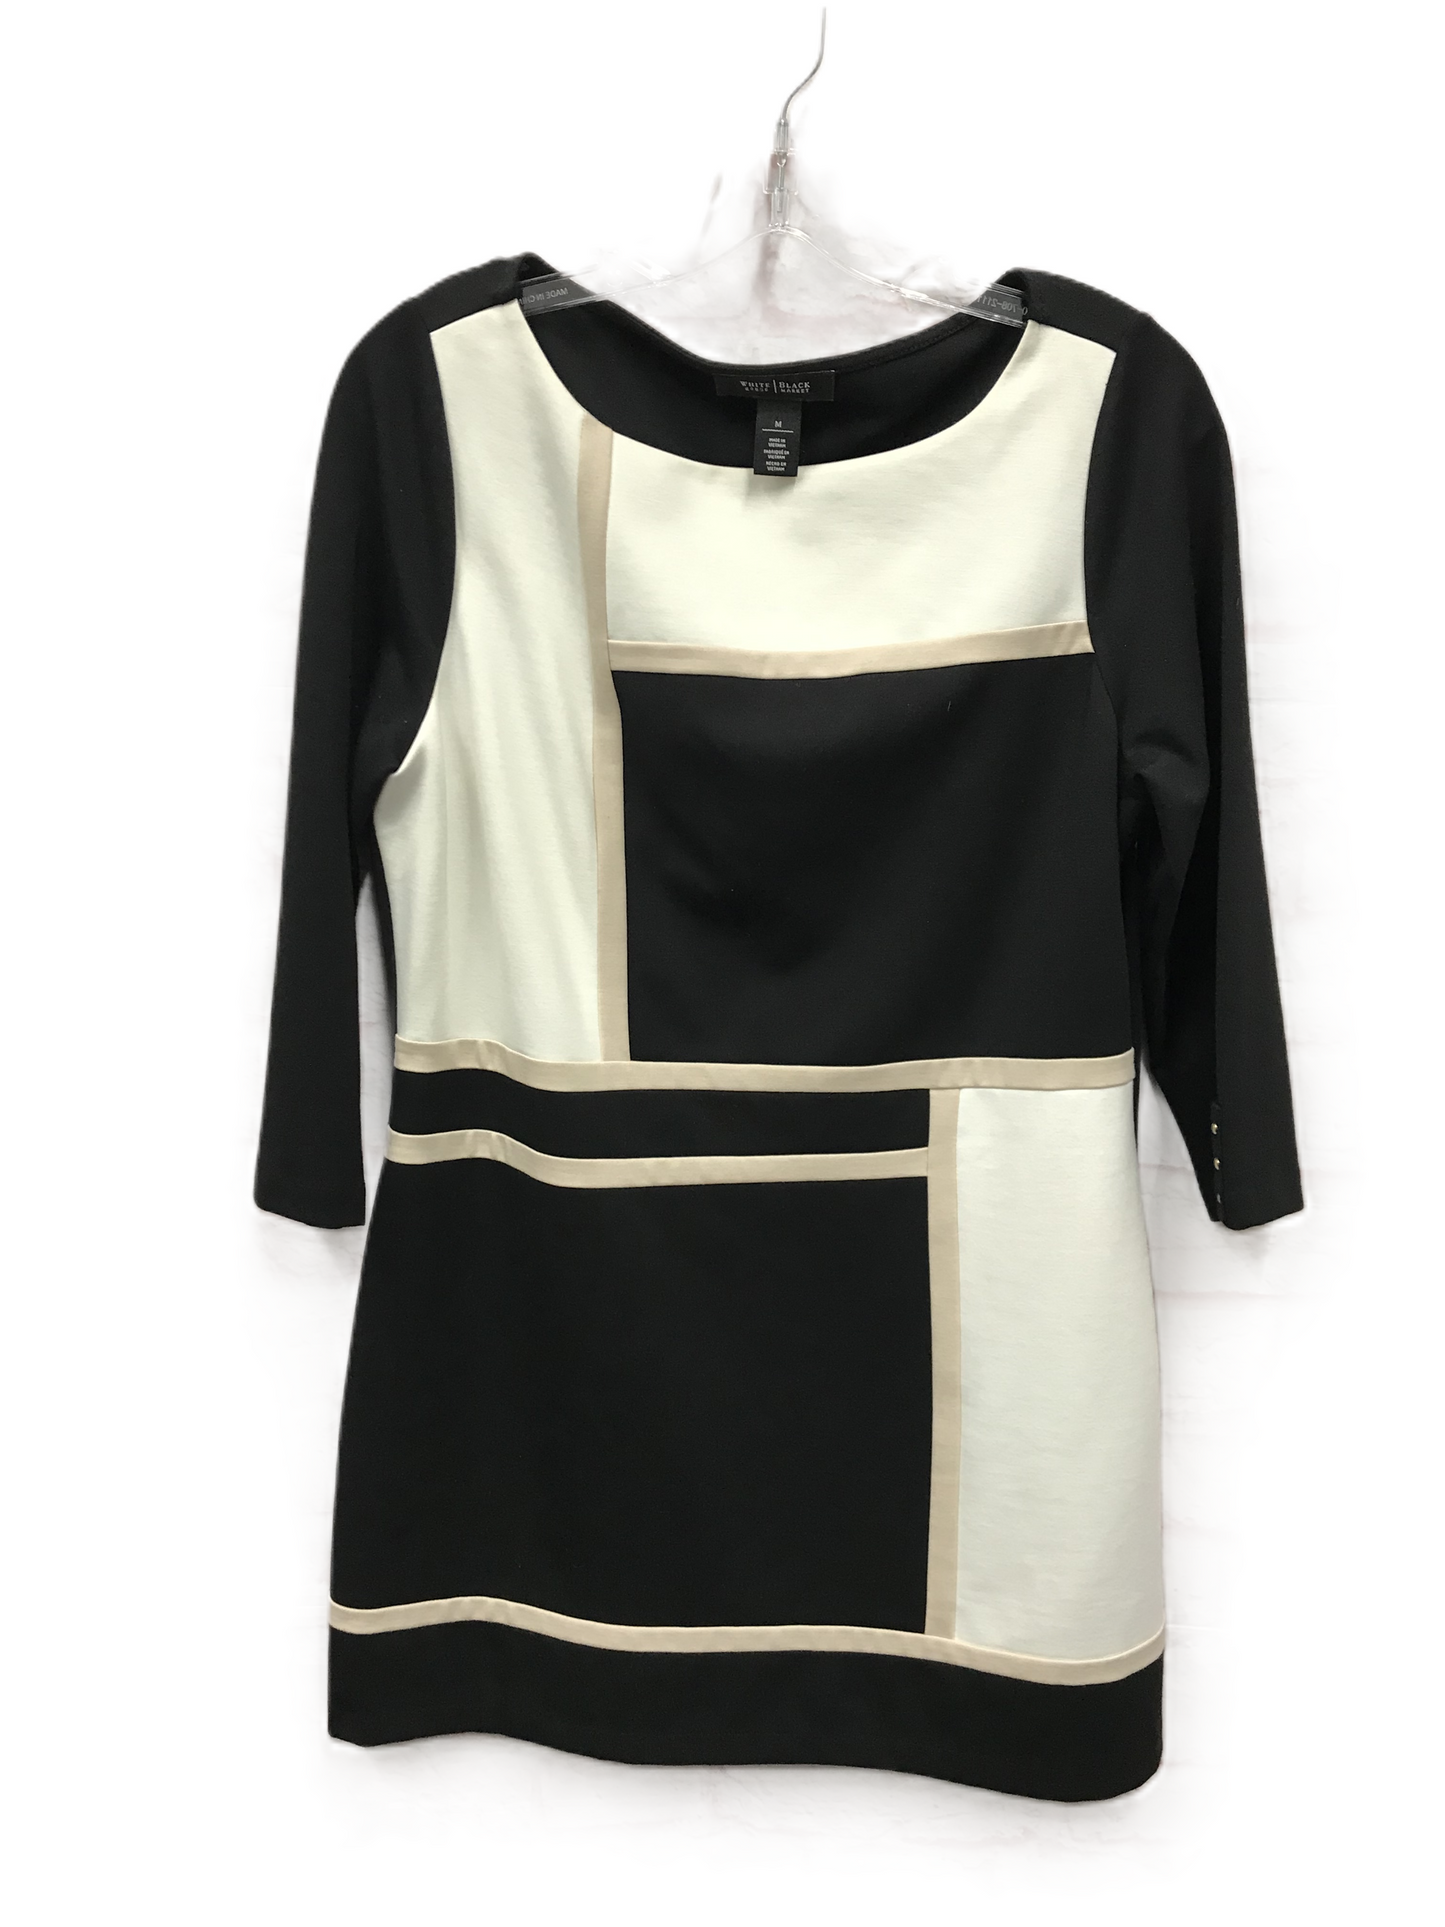 Black & White Dress Casual Short By White House Black Market, Size: M